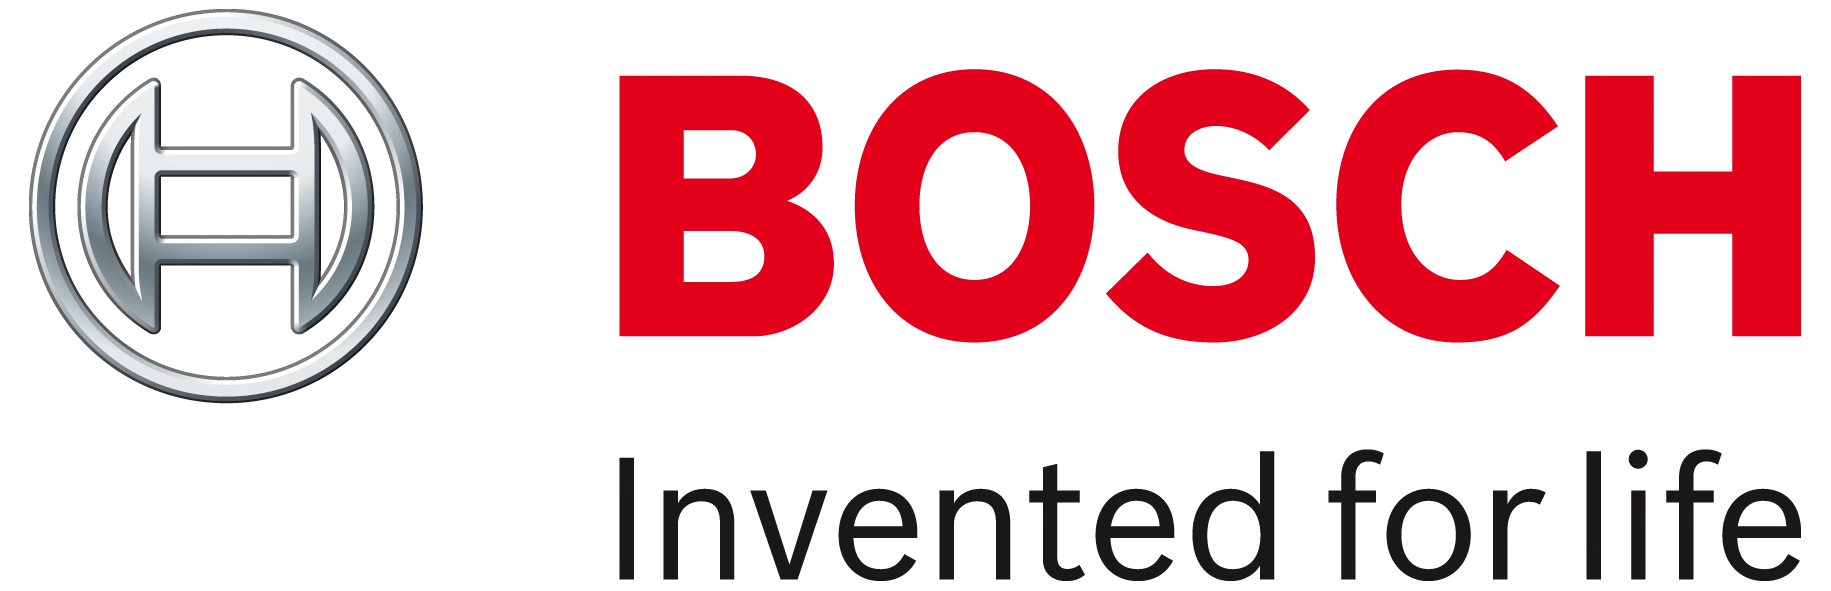 Bosch service center for home appliances repair